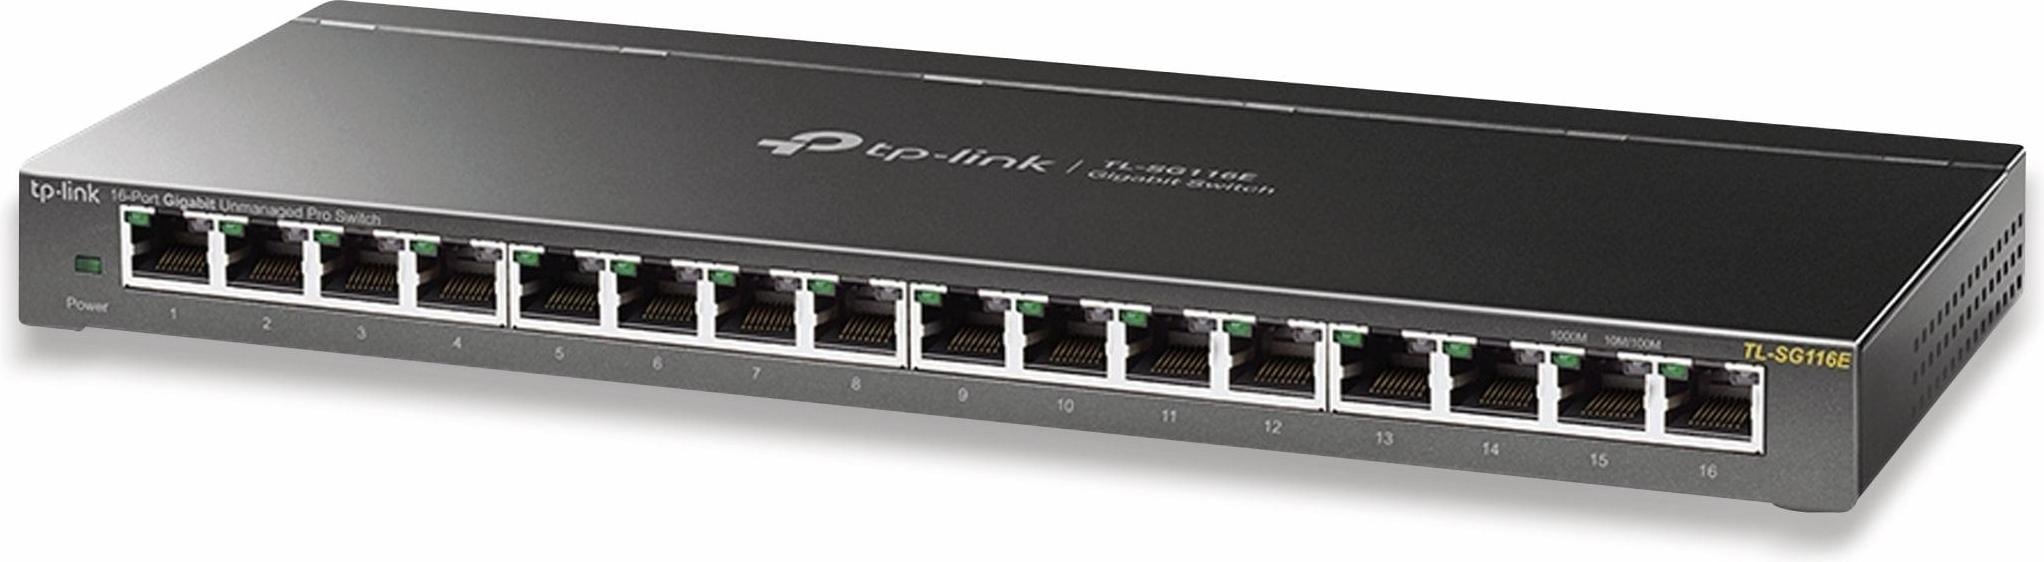 TP-Link TL-SG116E (16 Ports), Netzwerk Switch, Schwarz